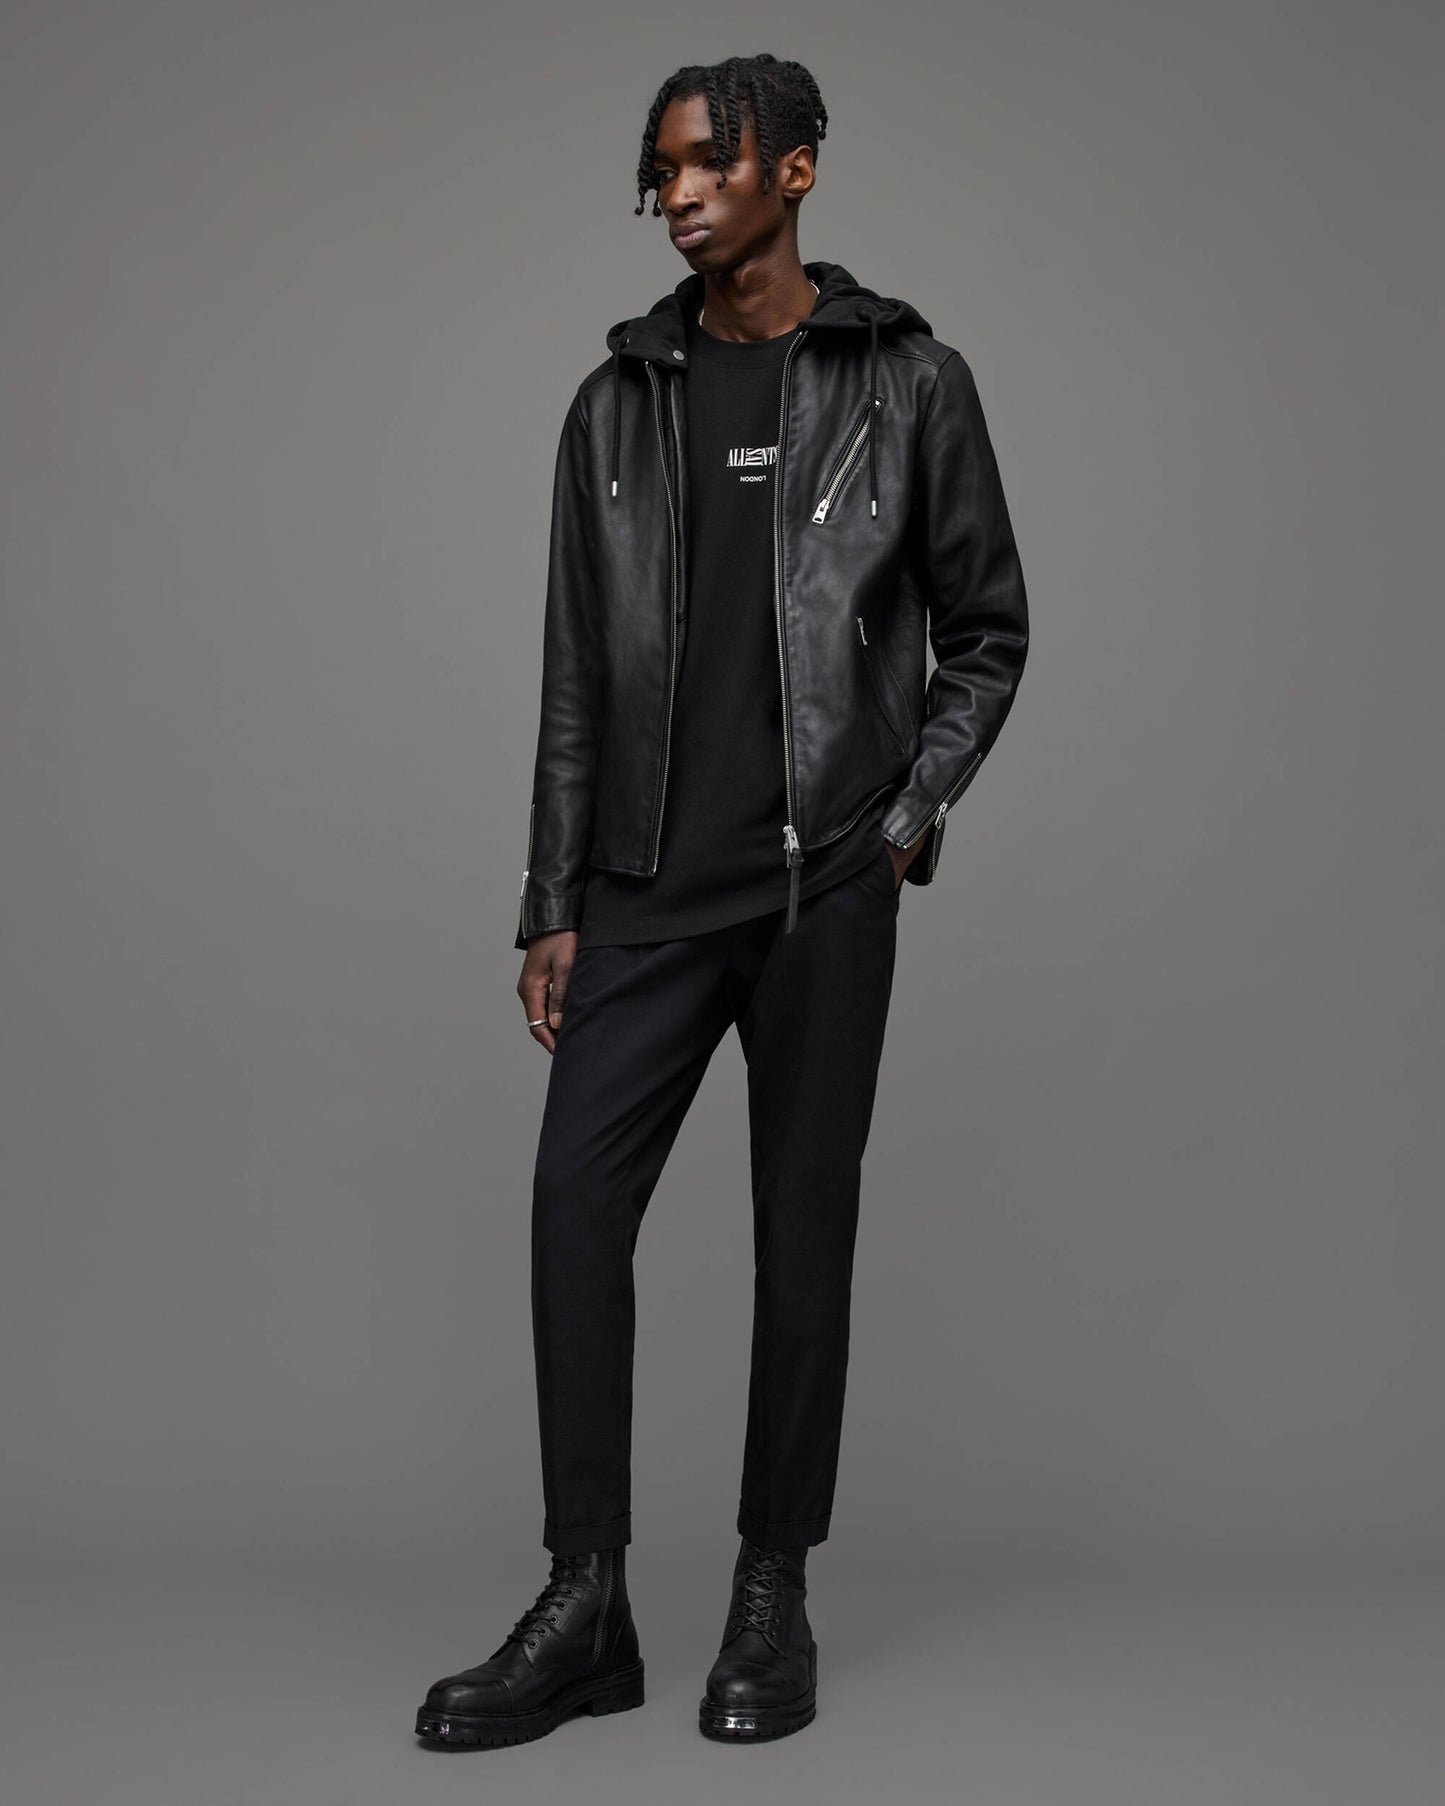 Men's Leather Biker Jacket In Black With Hood